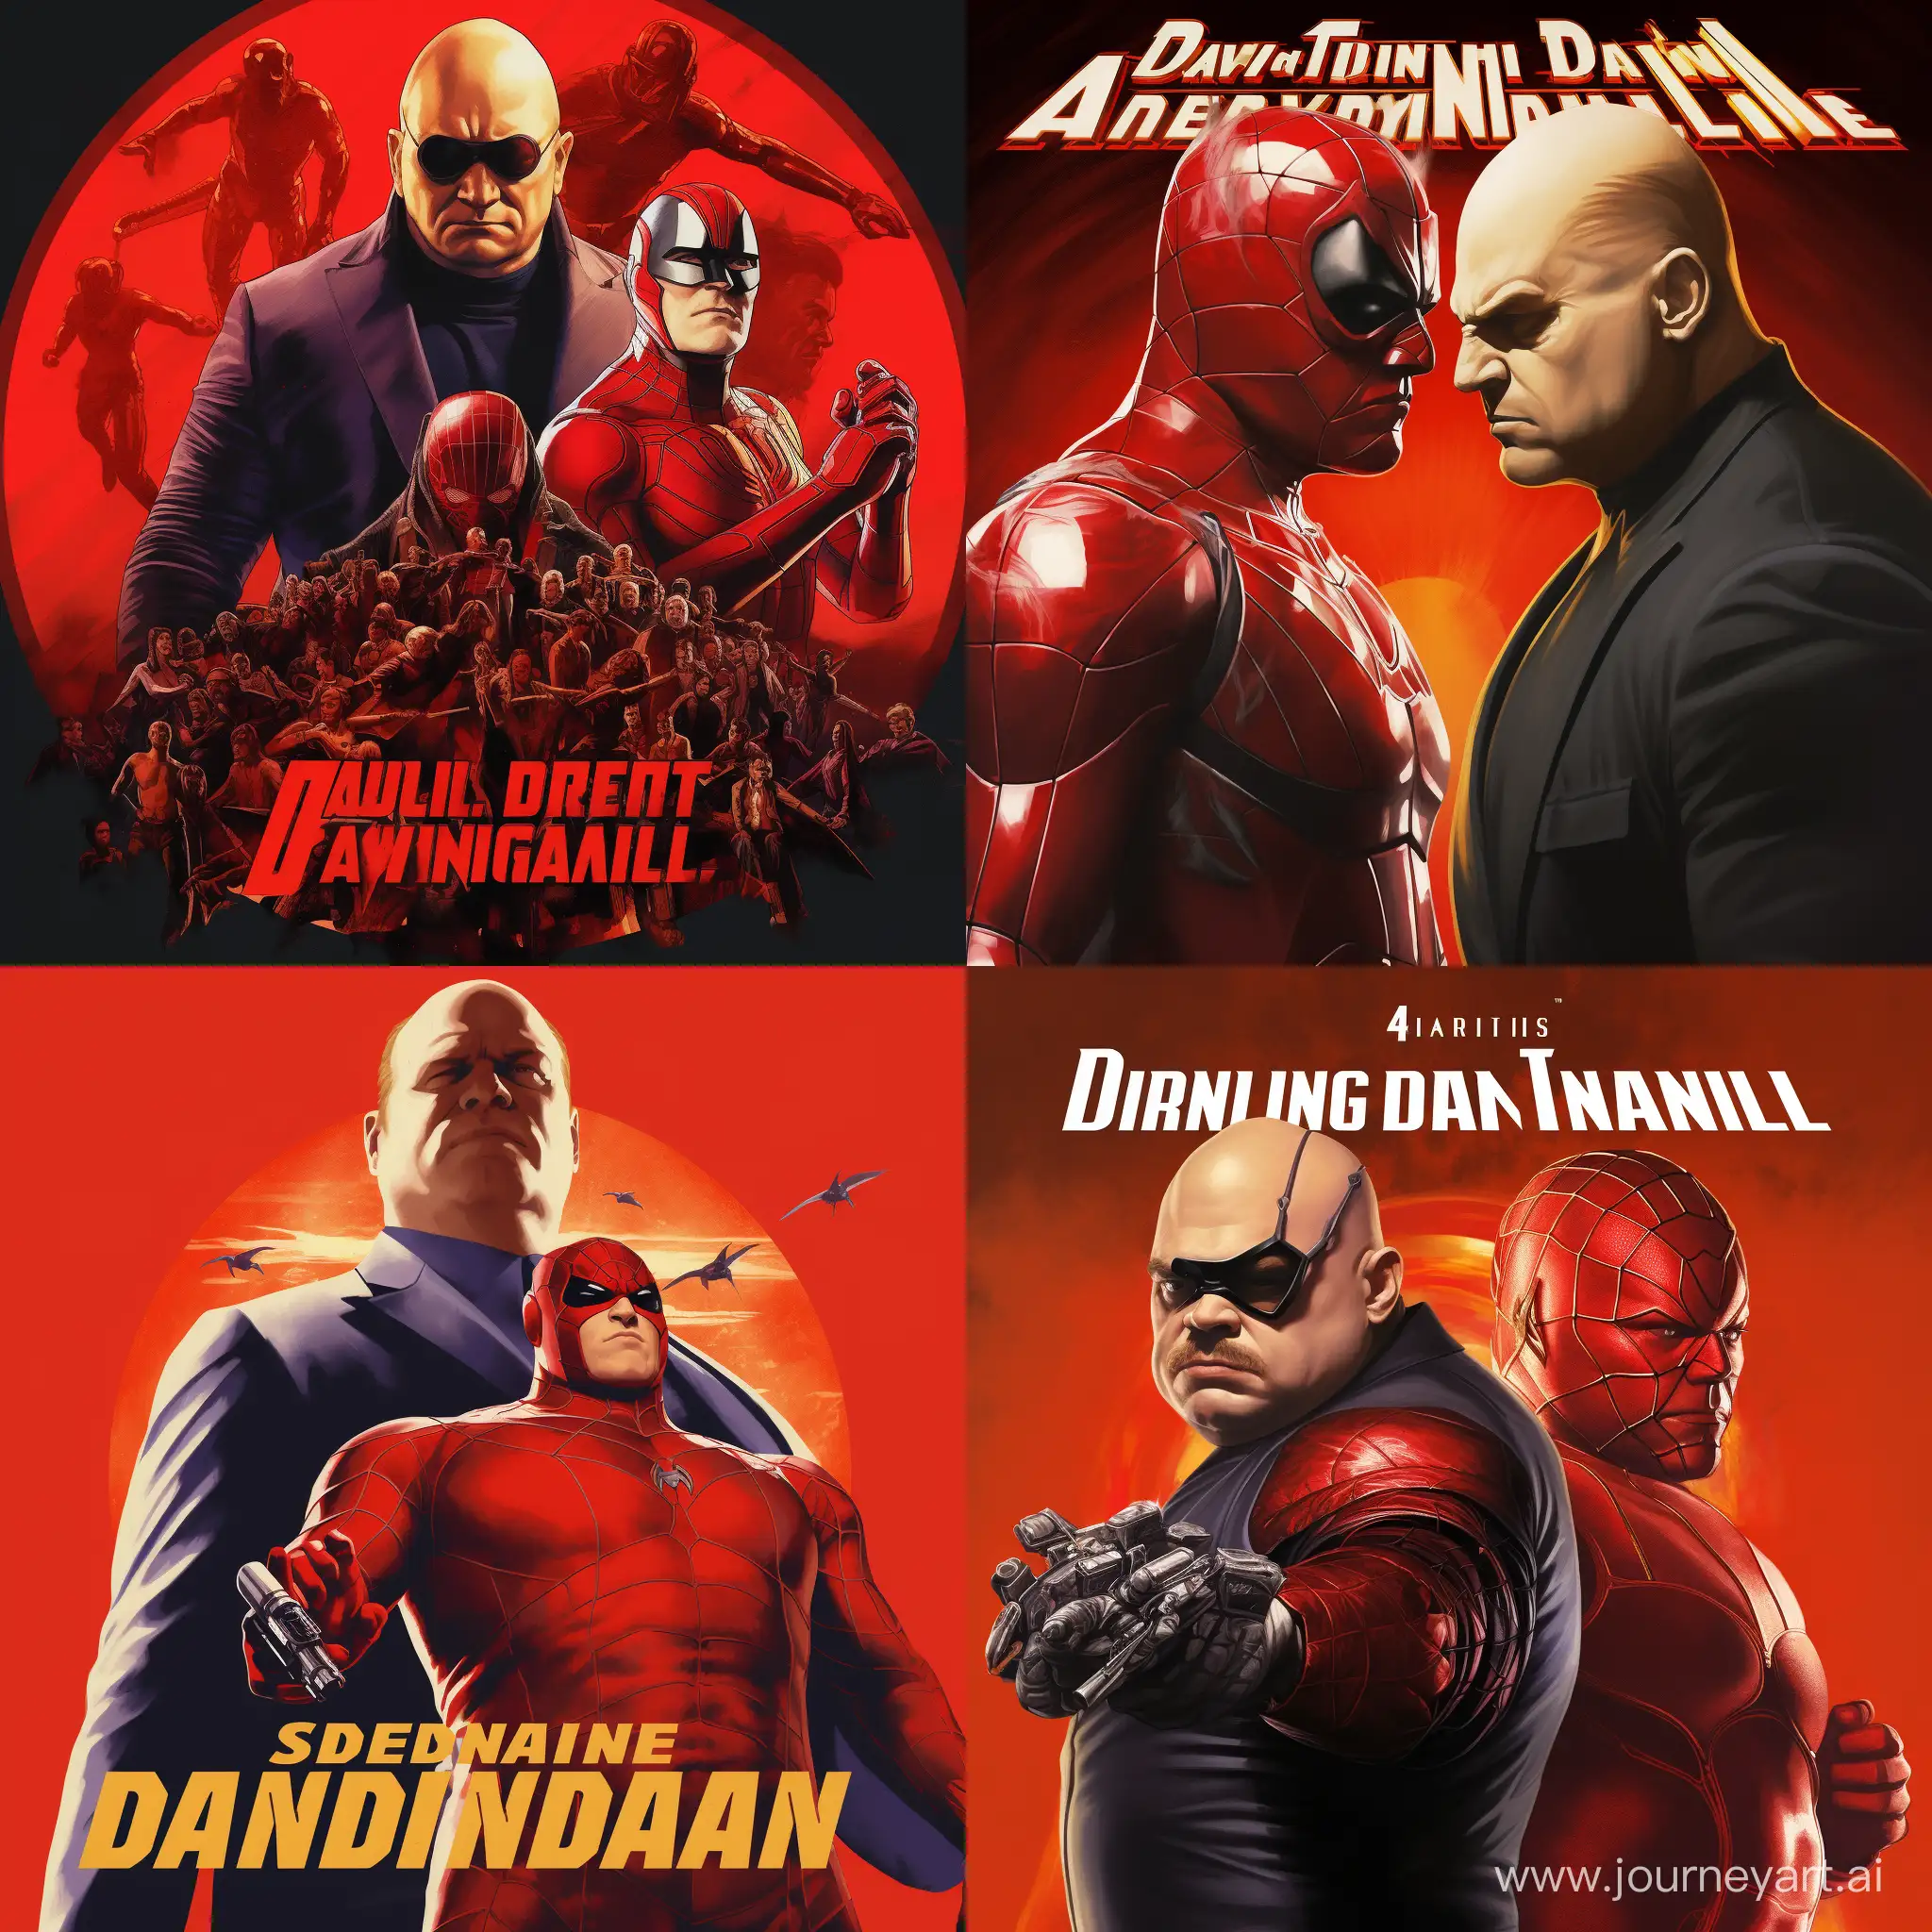 Epic-Battle-SpiderMan-and-Daredevil-Take-On-Kingpin-Marvel-Studios-Movie-Poster